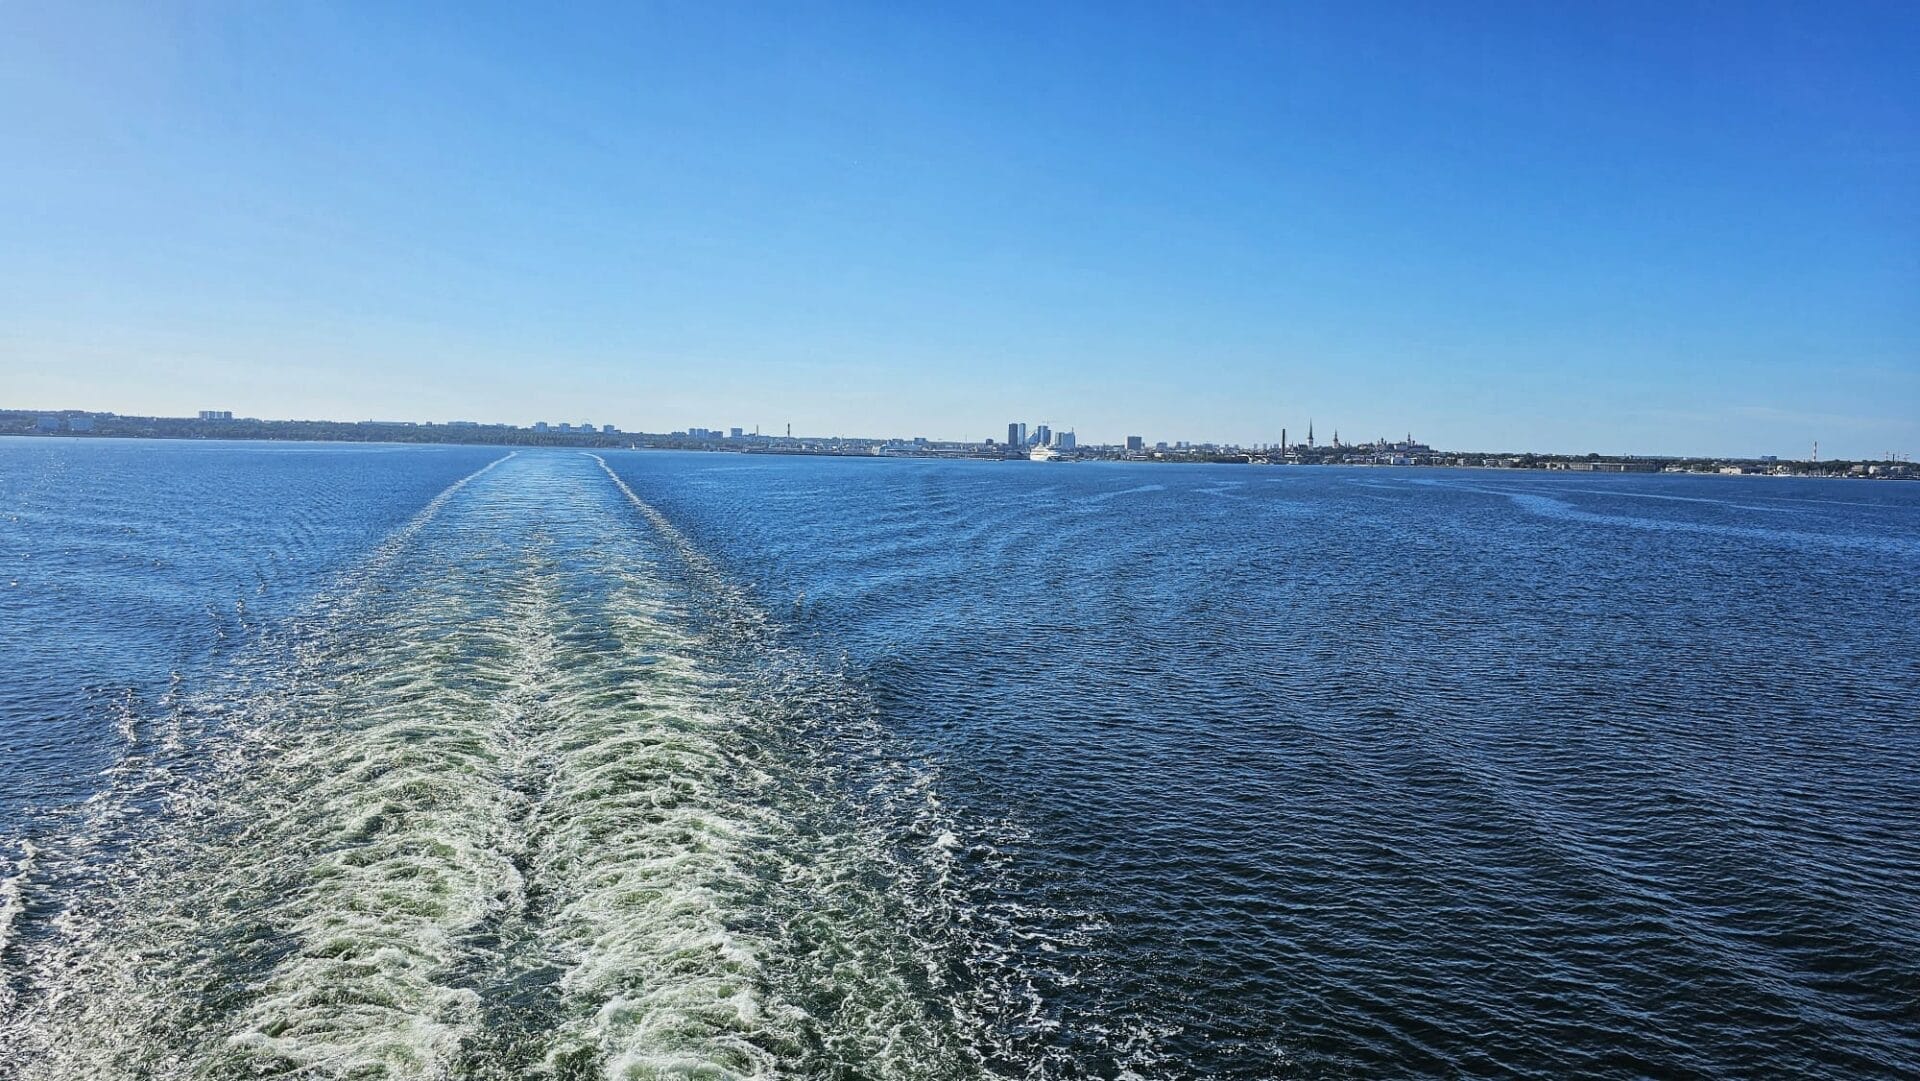 Ferry trip from Tallinn to Helsinki - day trip 